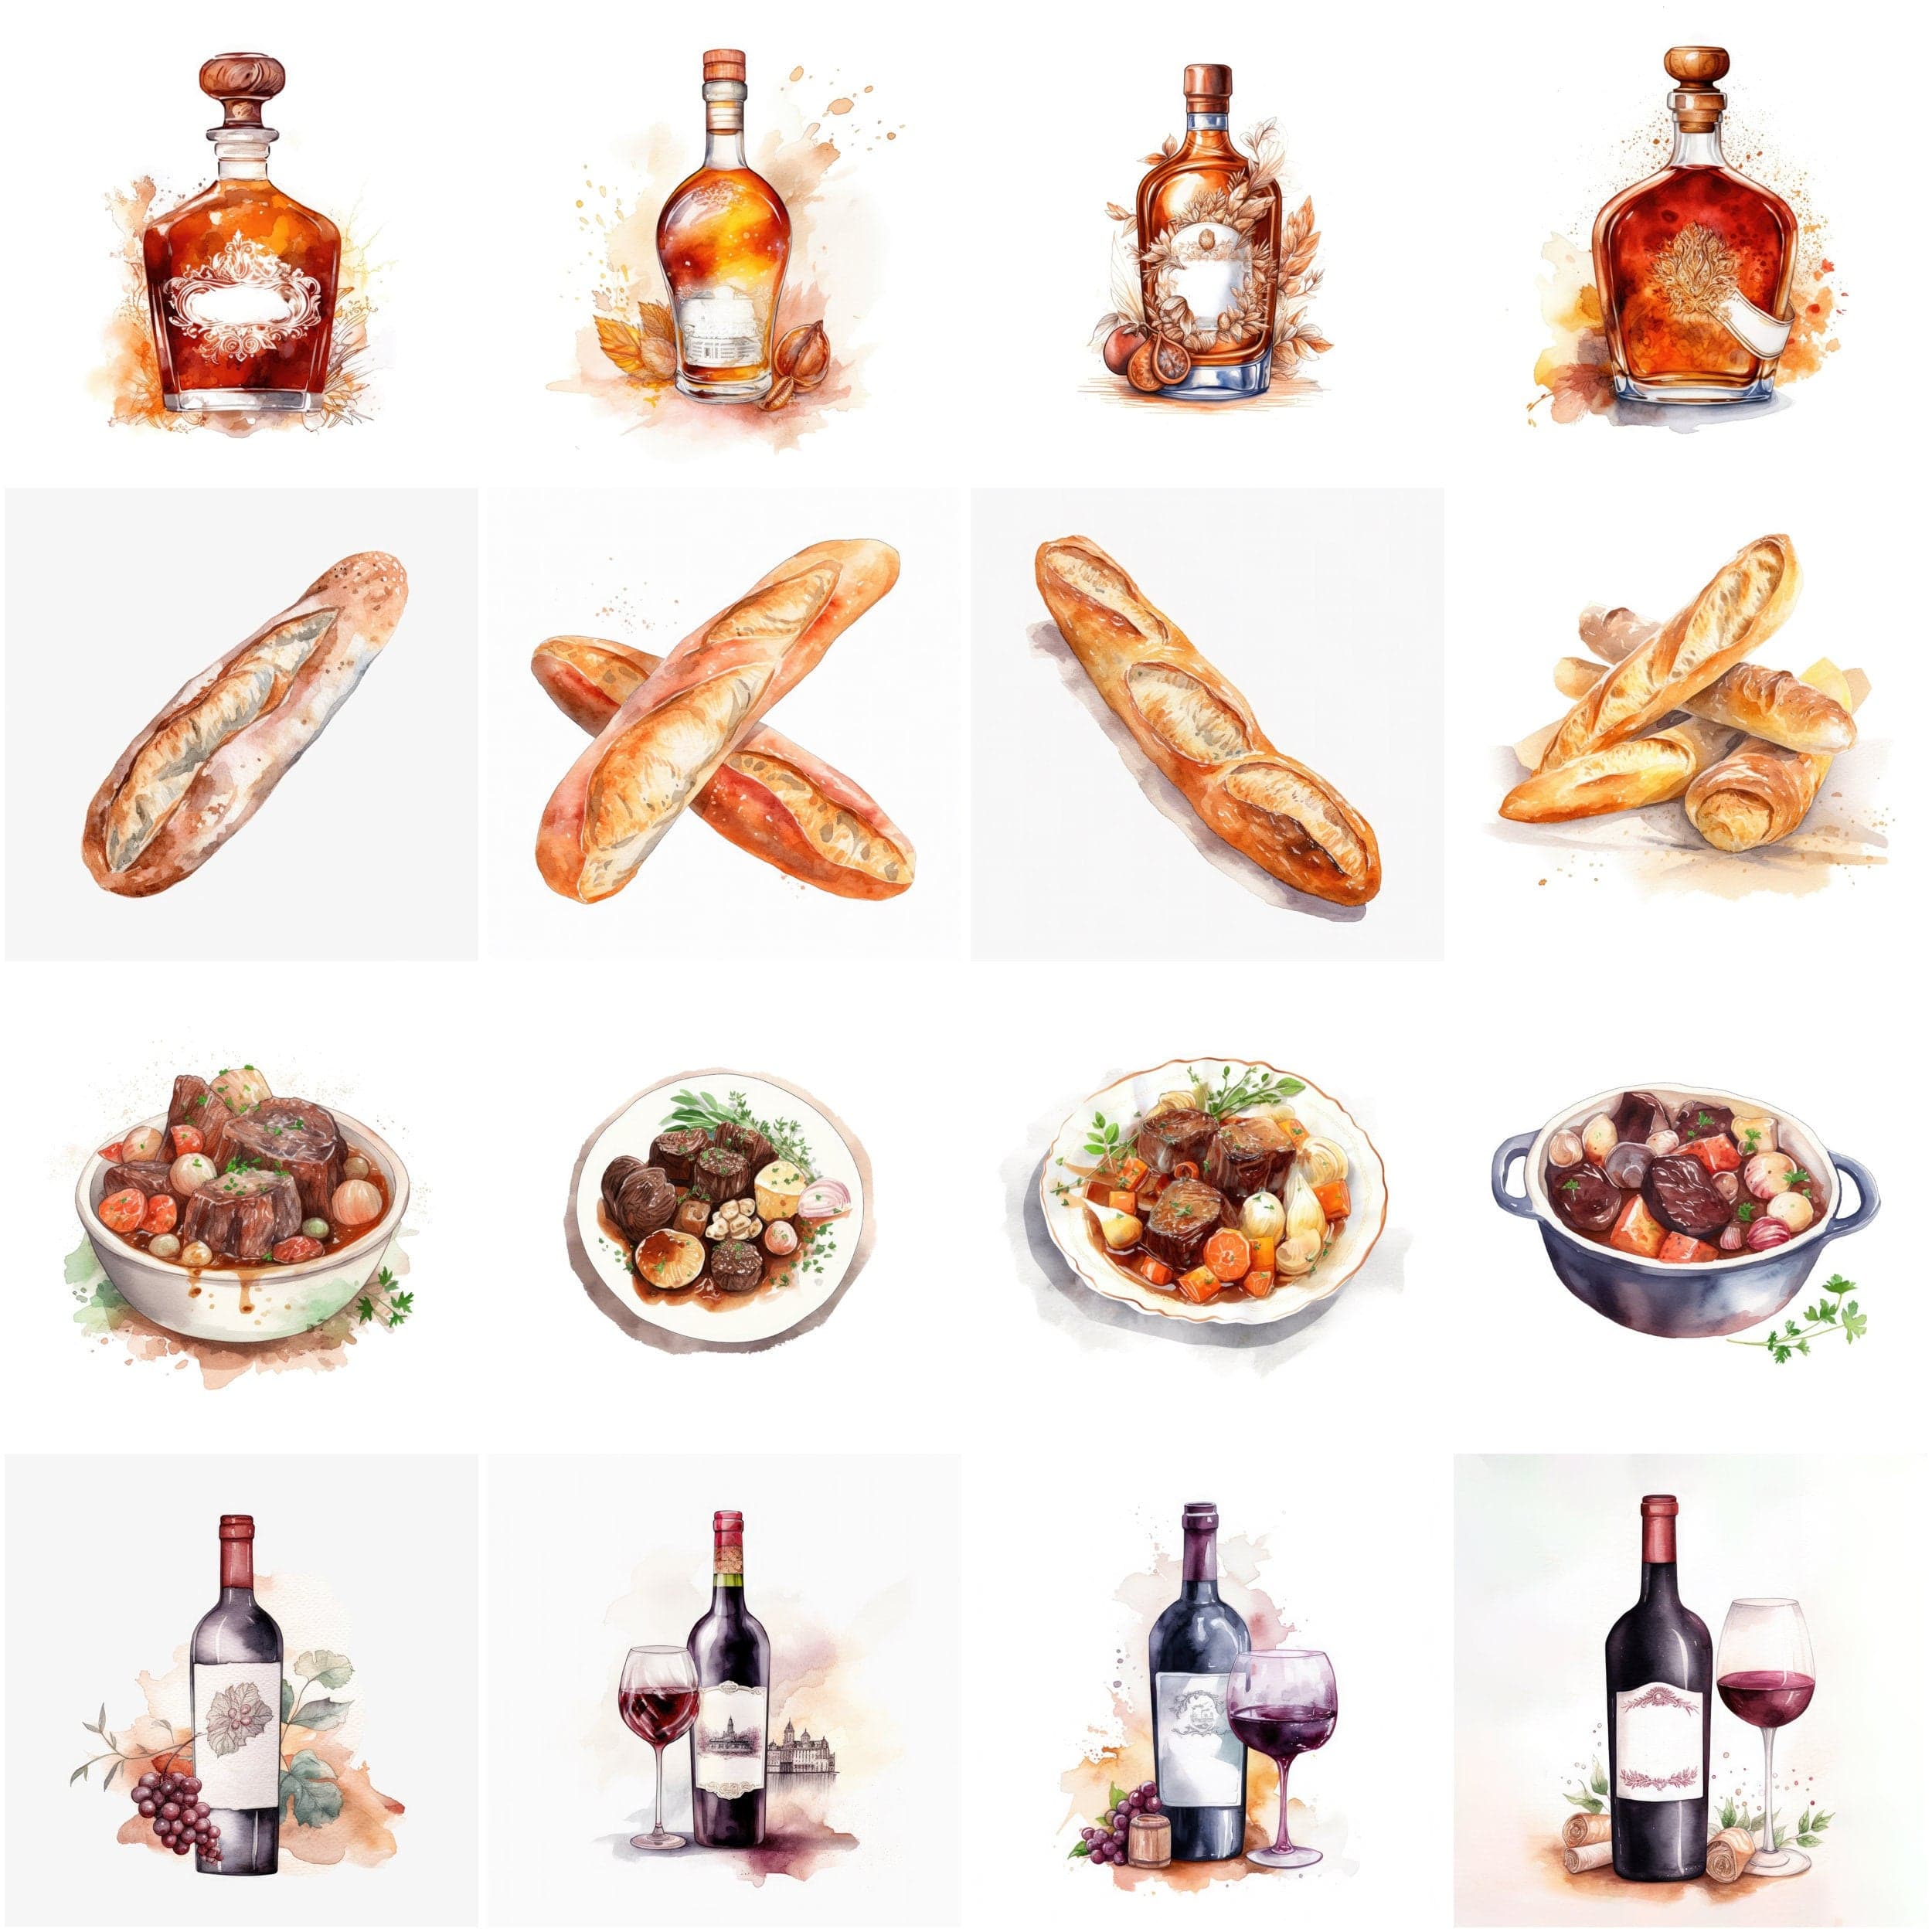 100 Transparent Exquisite French Cuisine Watercolor Images Bundle - Digital Download for Instant Art, Scrapbooking, and DIY Projects Digital Download Sumobundle